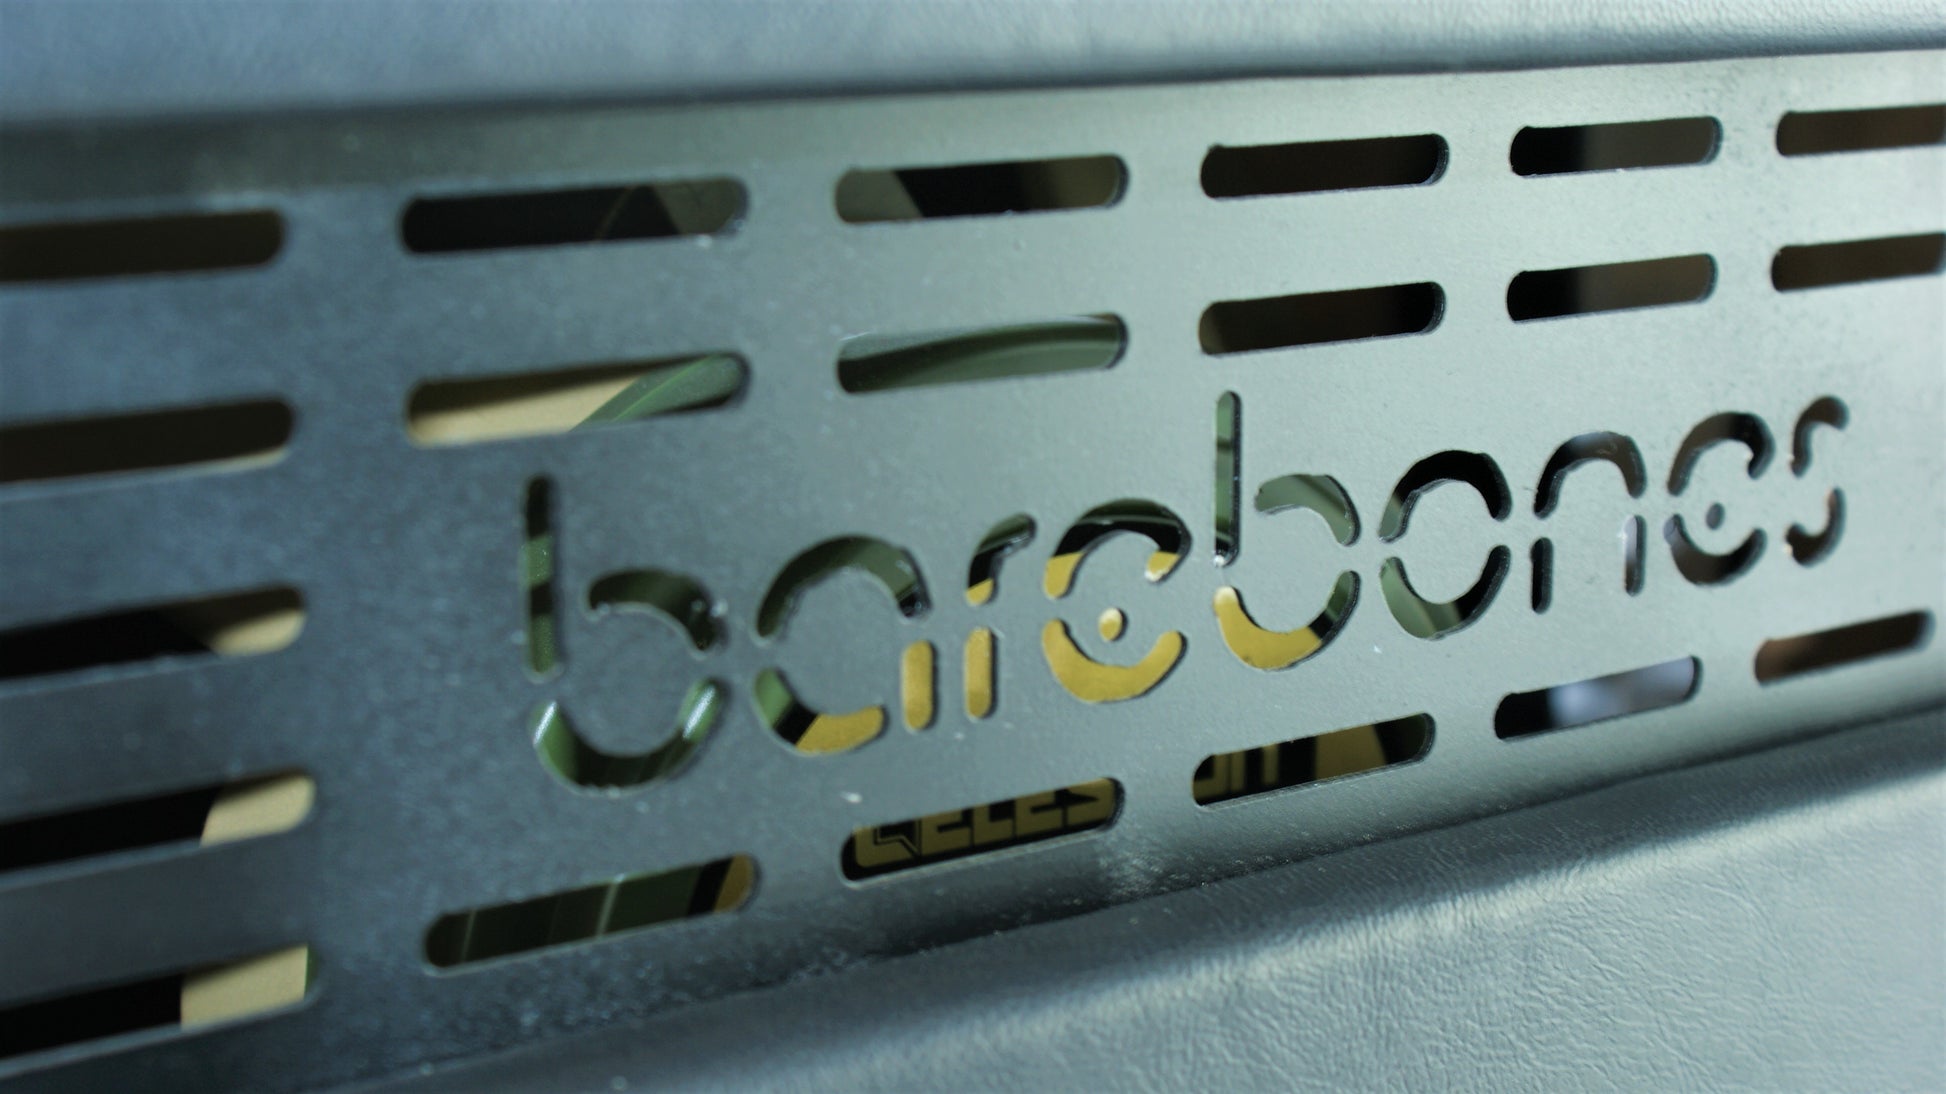 barebones Monza18 - Handwired All-Valve Guitar Amplifier - Made in the UK